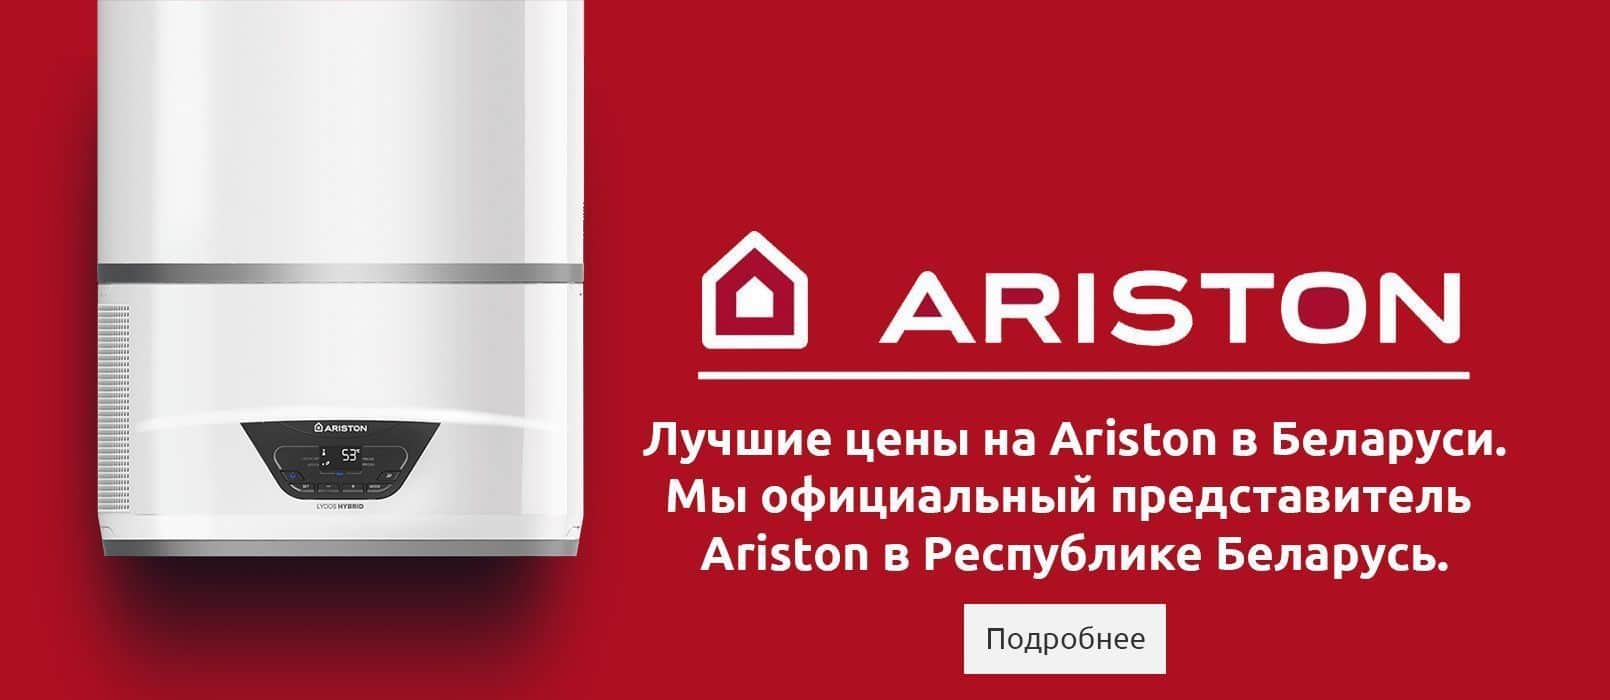 Ariston фирма. Ariston водонагреватель reklama banner. Реклама Аристон. Котлы Аристон реклама. Ariston водонагреватели реклама.